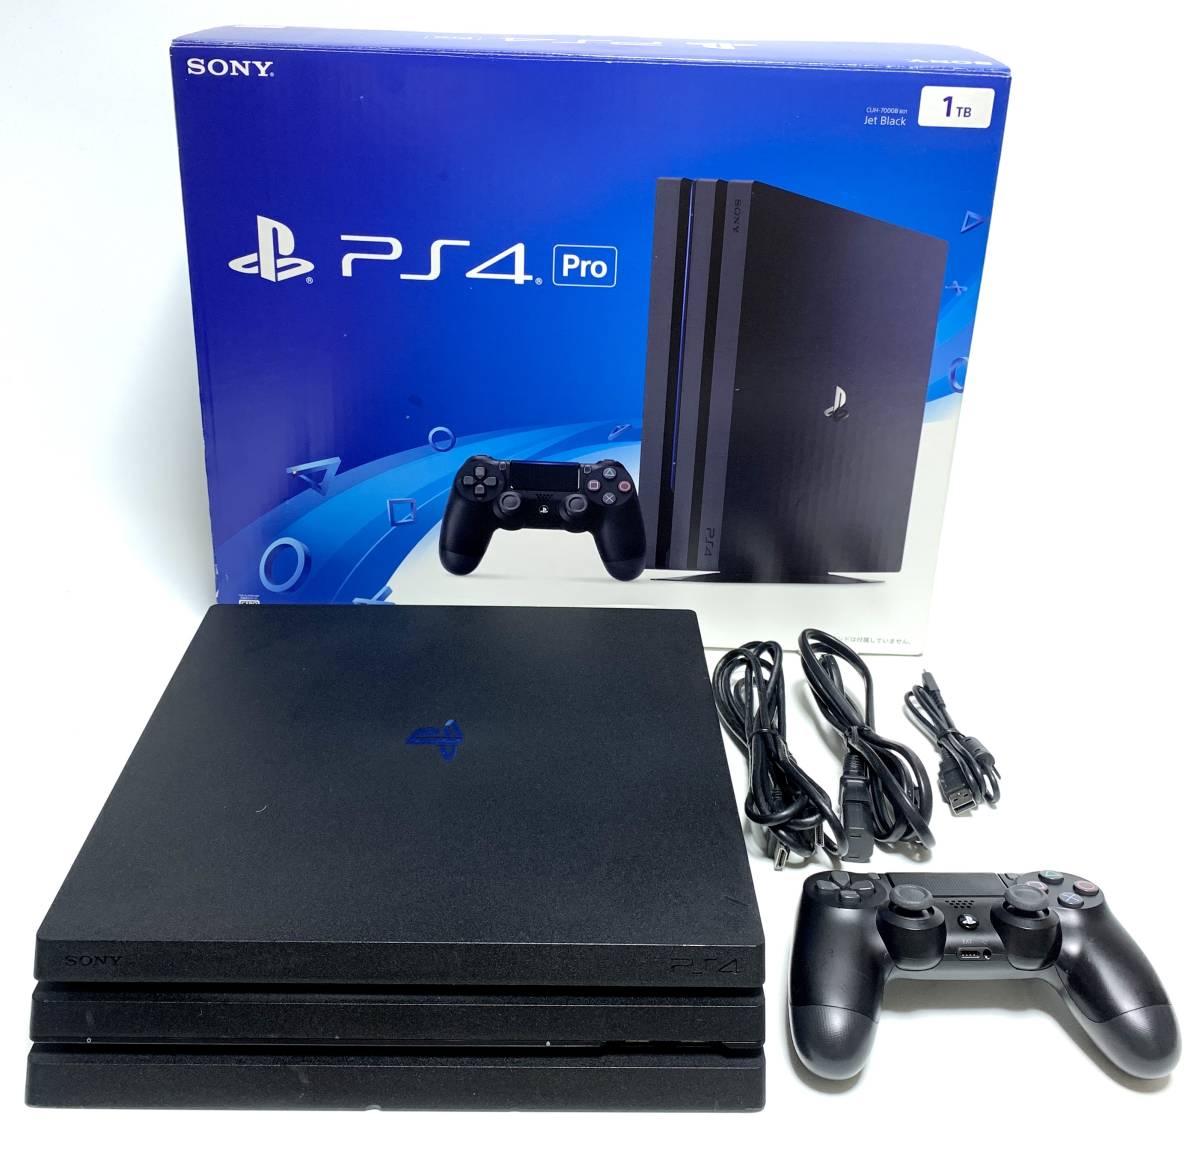 SEAL限定商品 PlayStation 4 Pro ジェット ブラック 1TB CUH-7000BB01